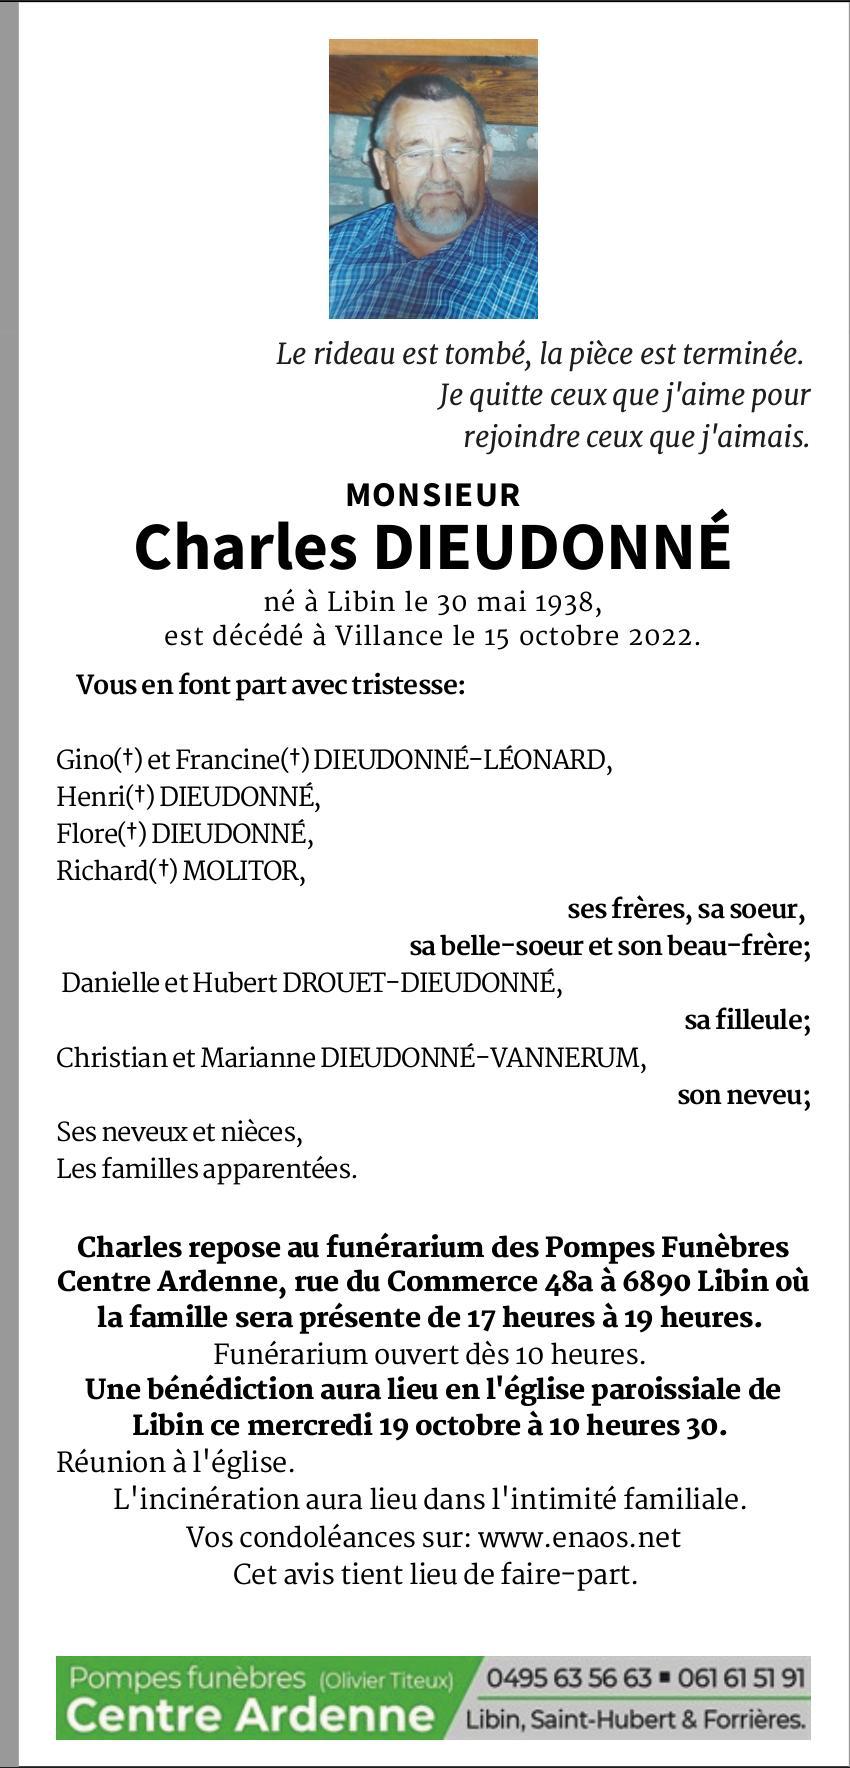 Charles dieudonne 1